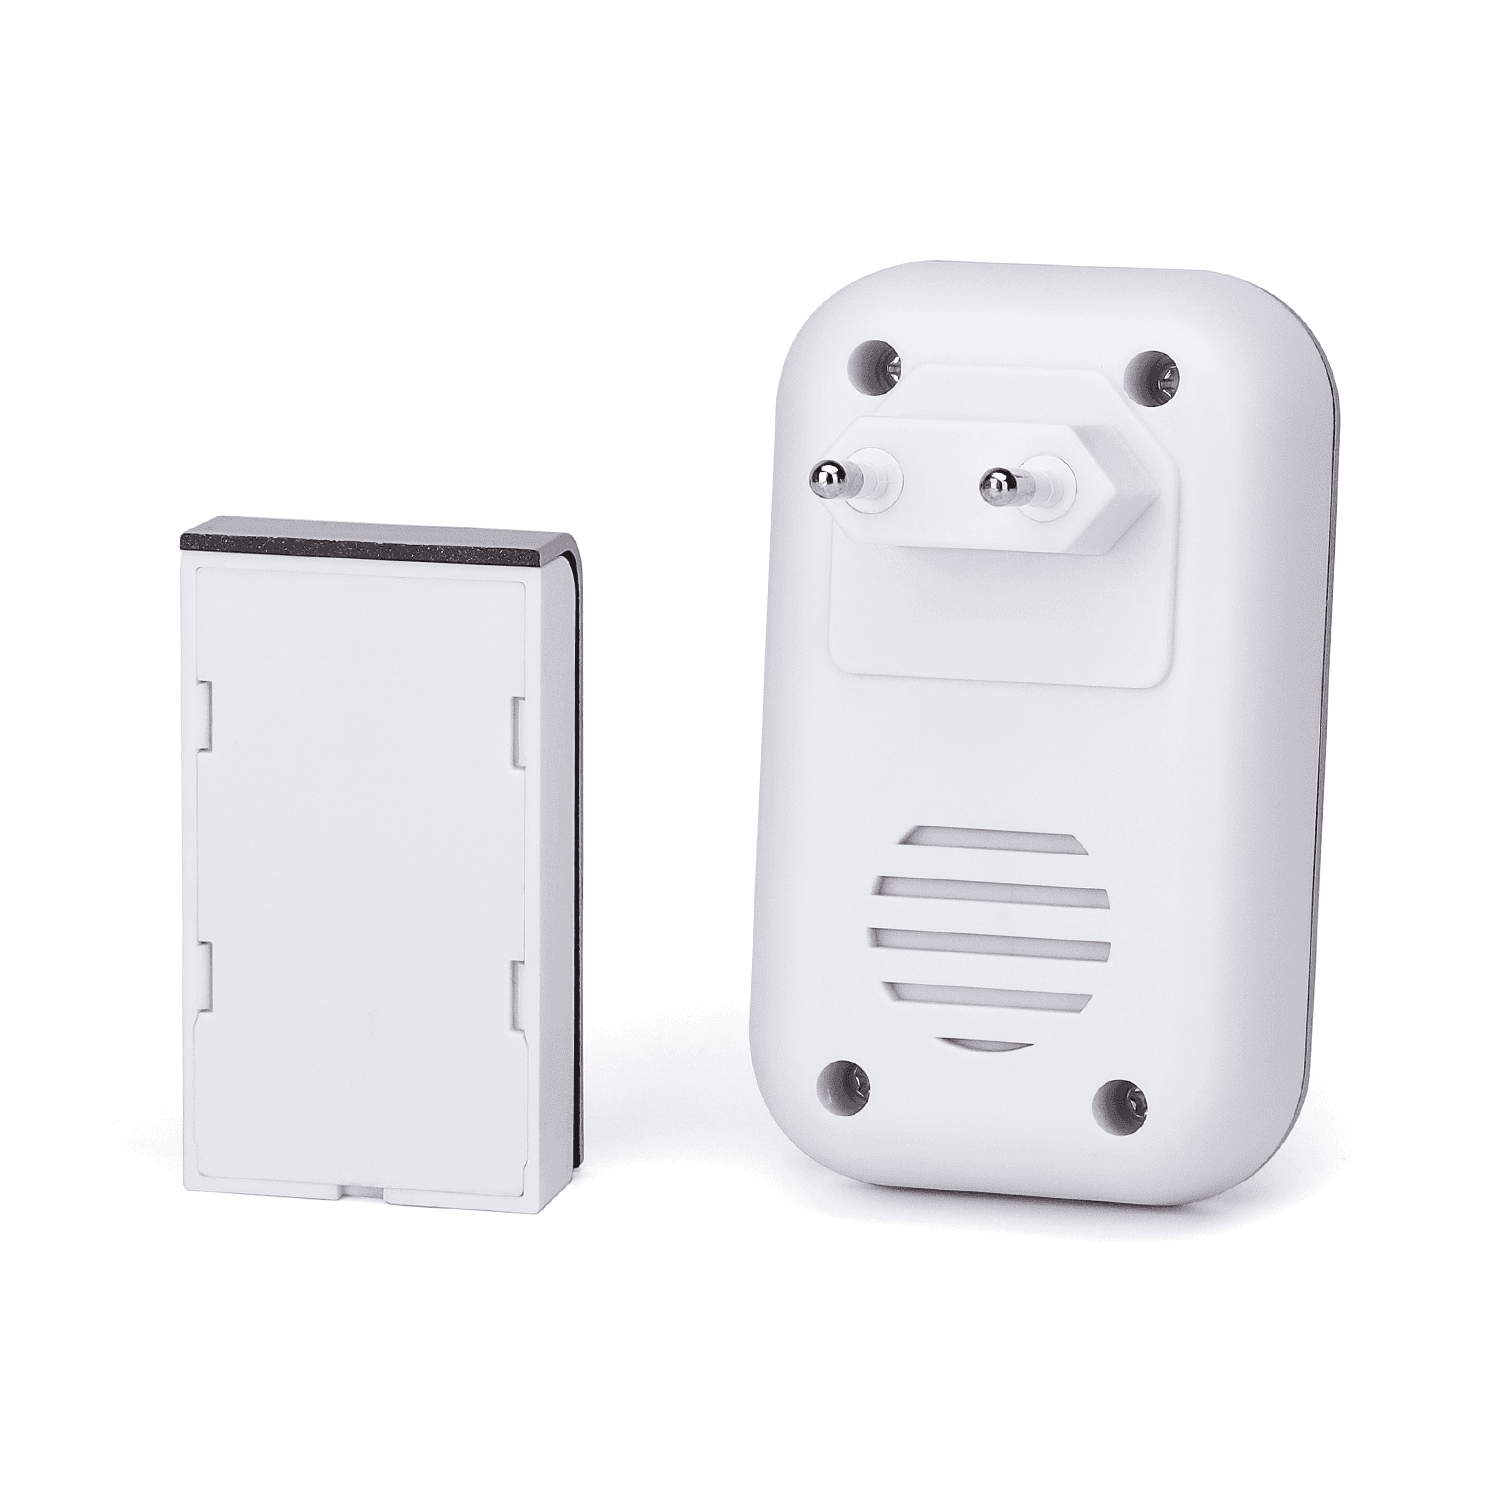 Silver AC wireless doorbell